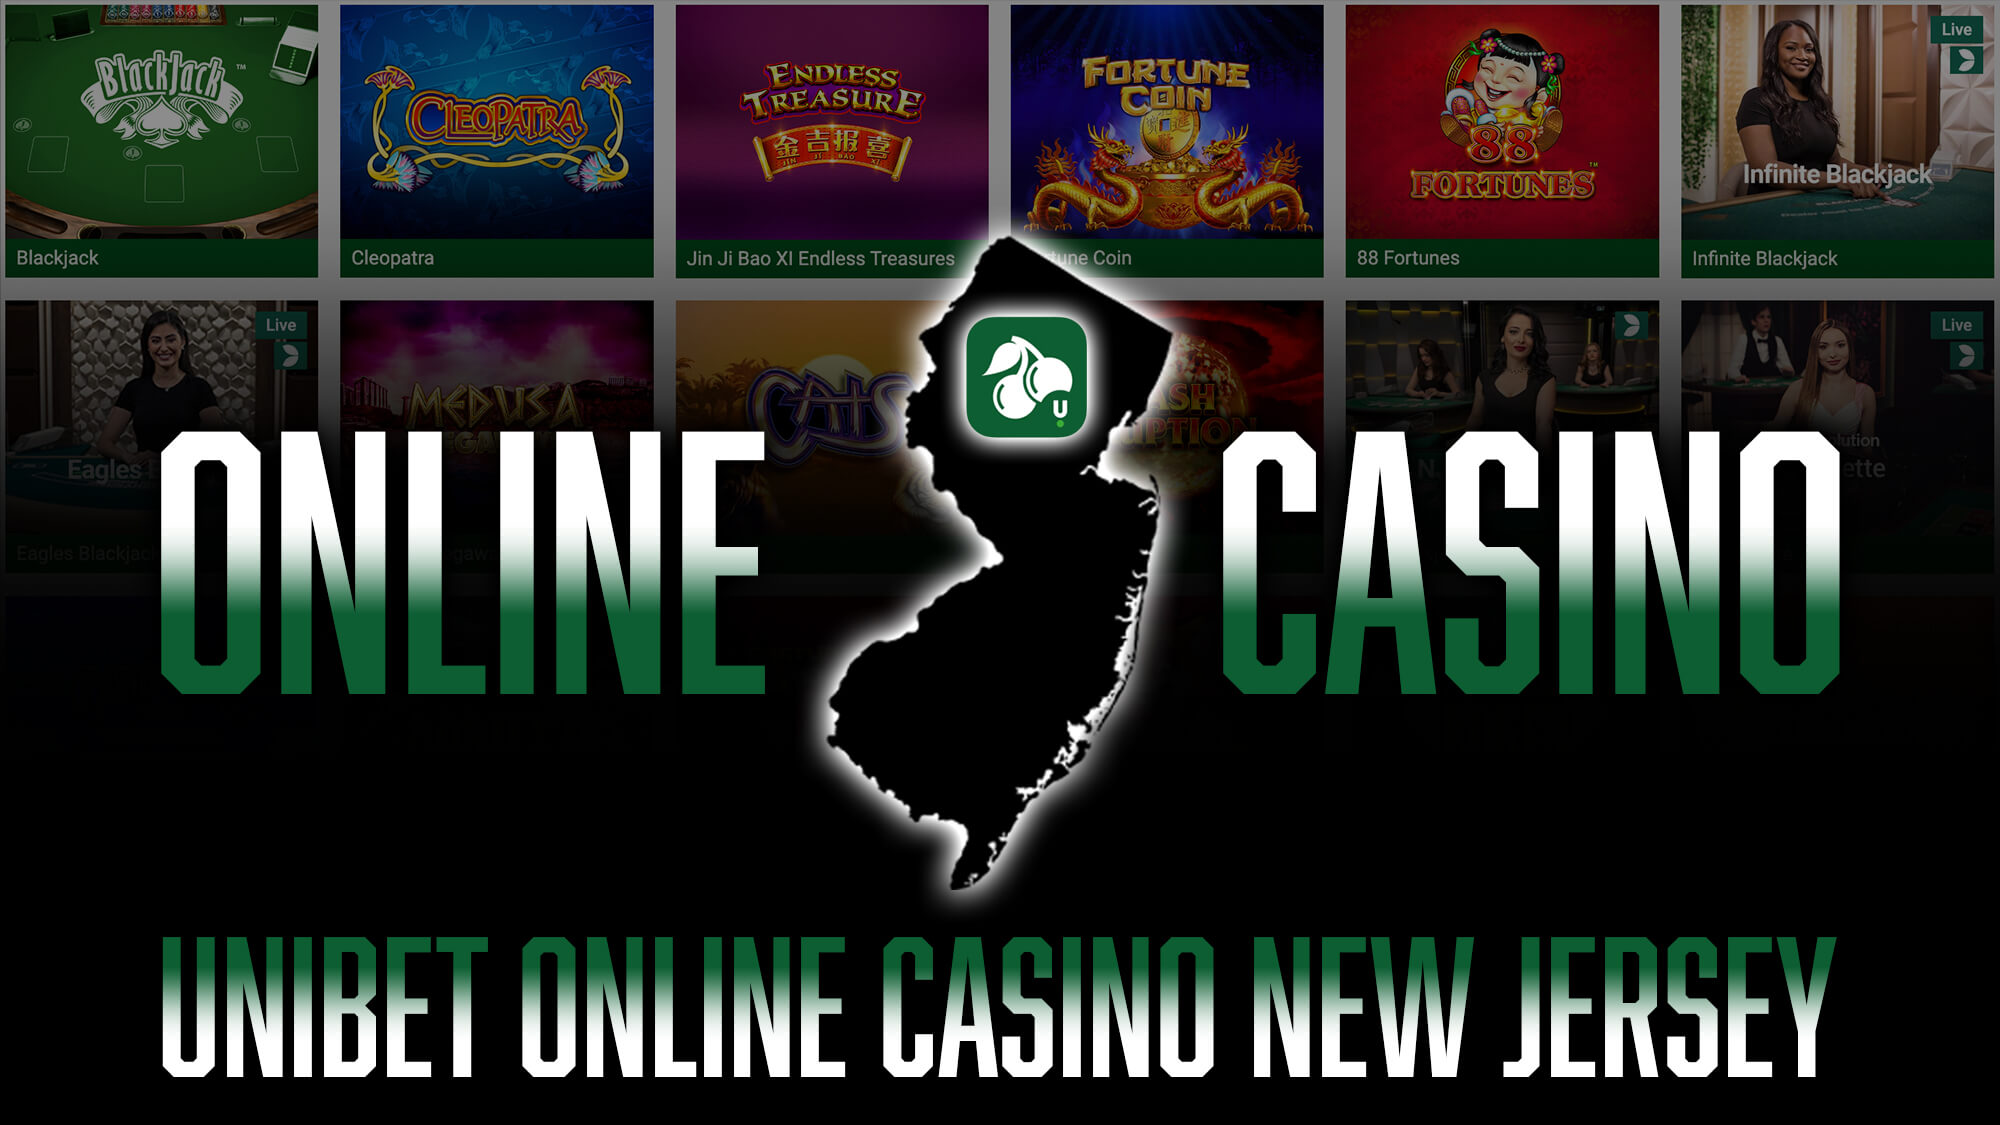 unibet casino slots & games